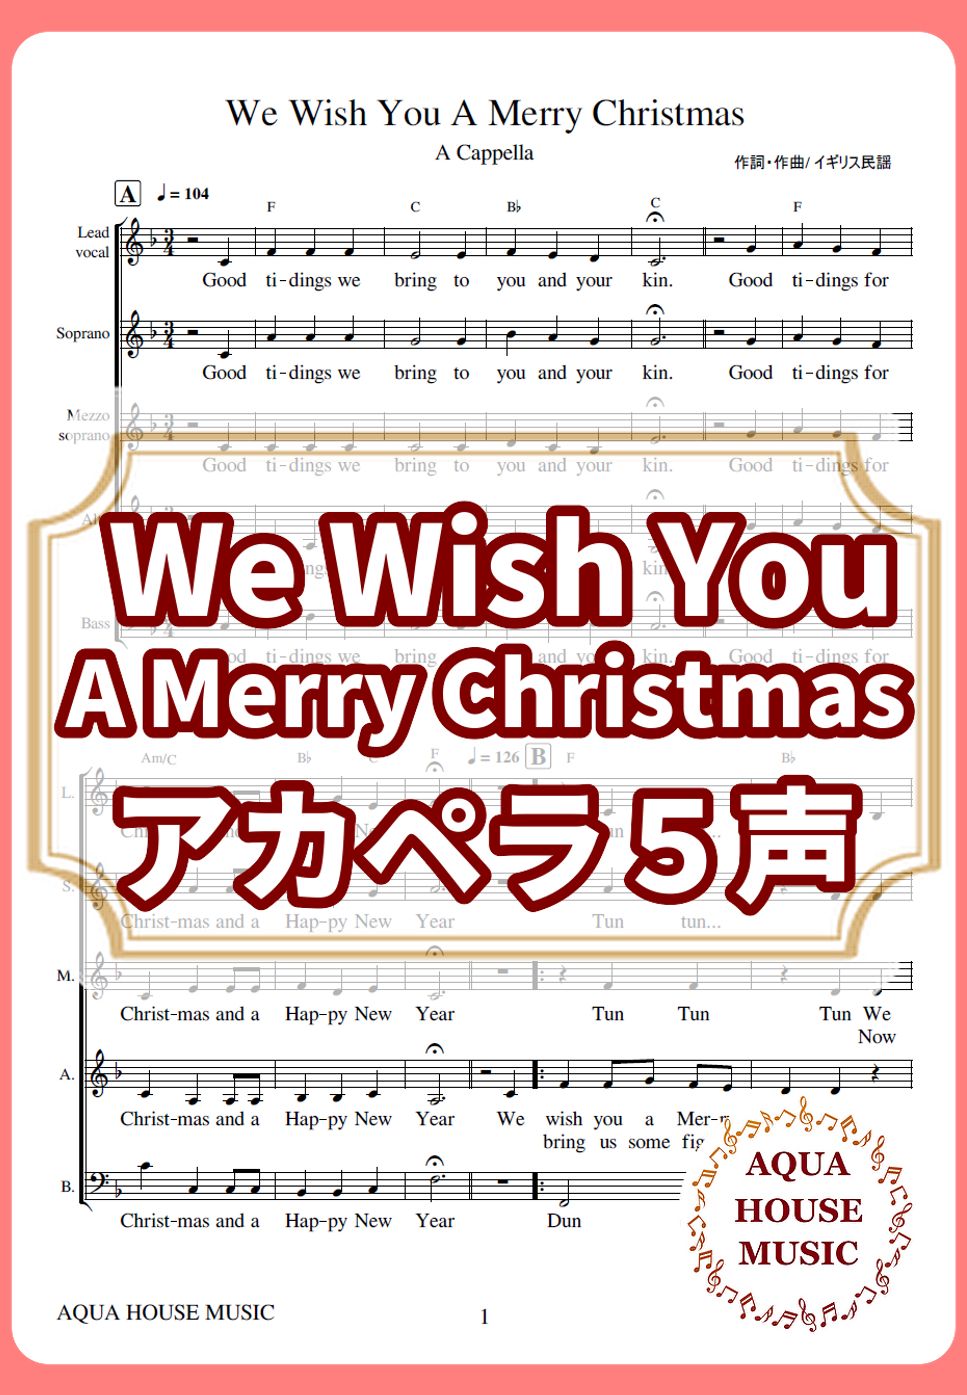 We Wish You A Merry Christmas(おめでとうクリスマス) (アカペラ楽譜♪5声ボイパなし) by 飯田 亜紗子